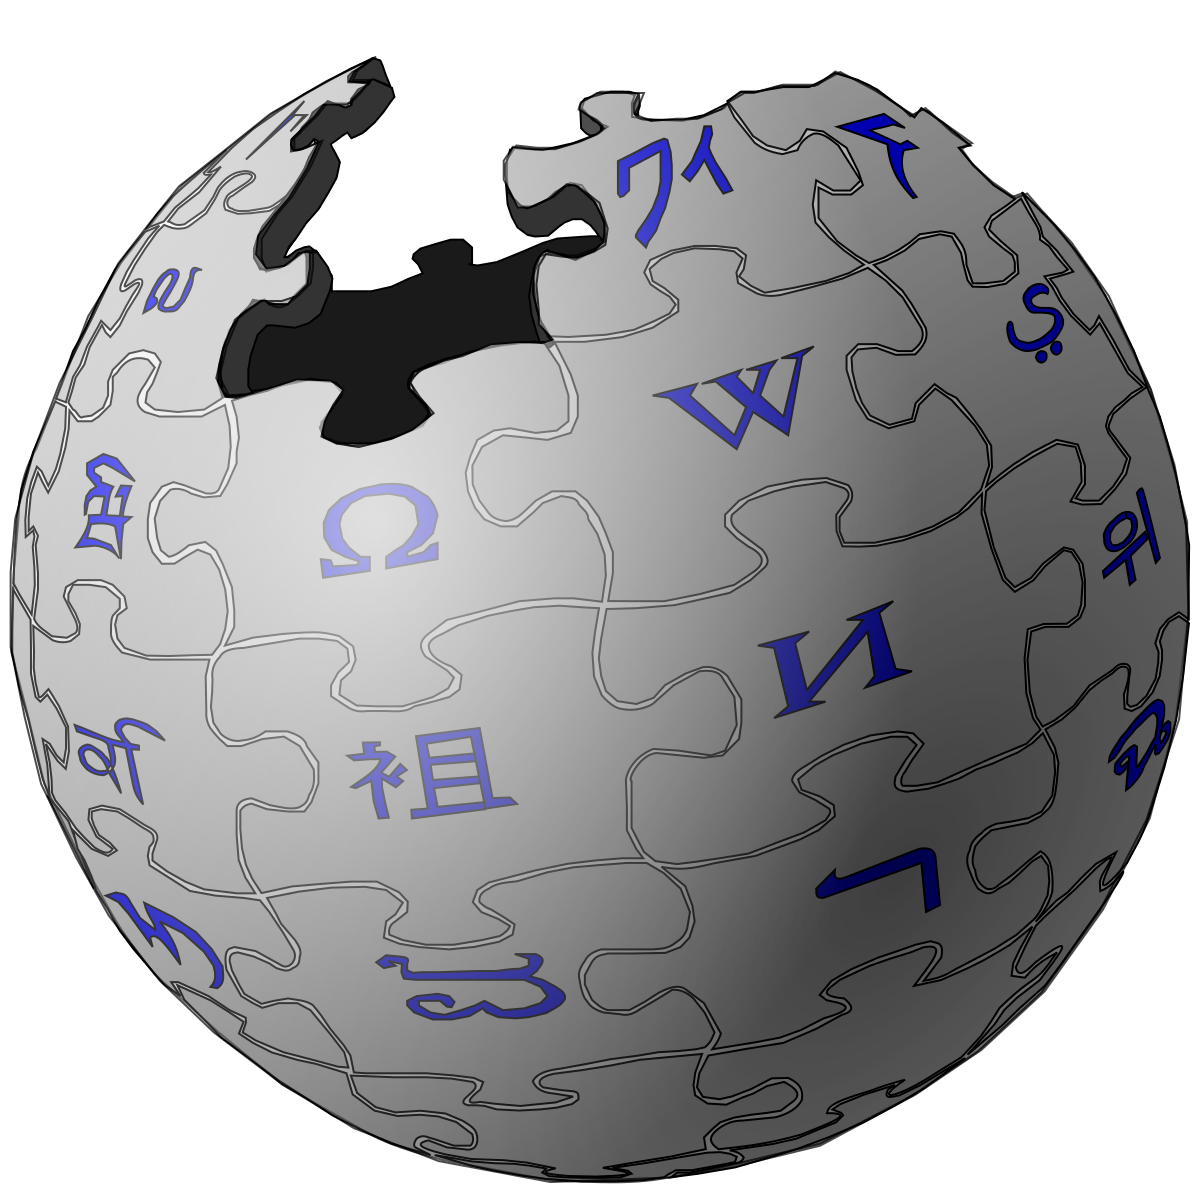 Википедия логотип. Википедия. Значок Википедии. Википедия картинки. Https www wikipedia